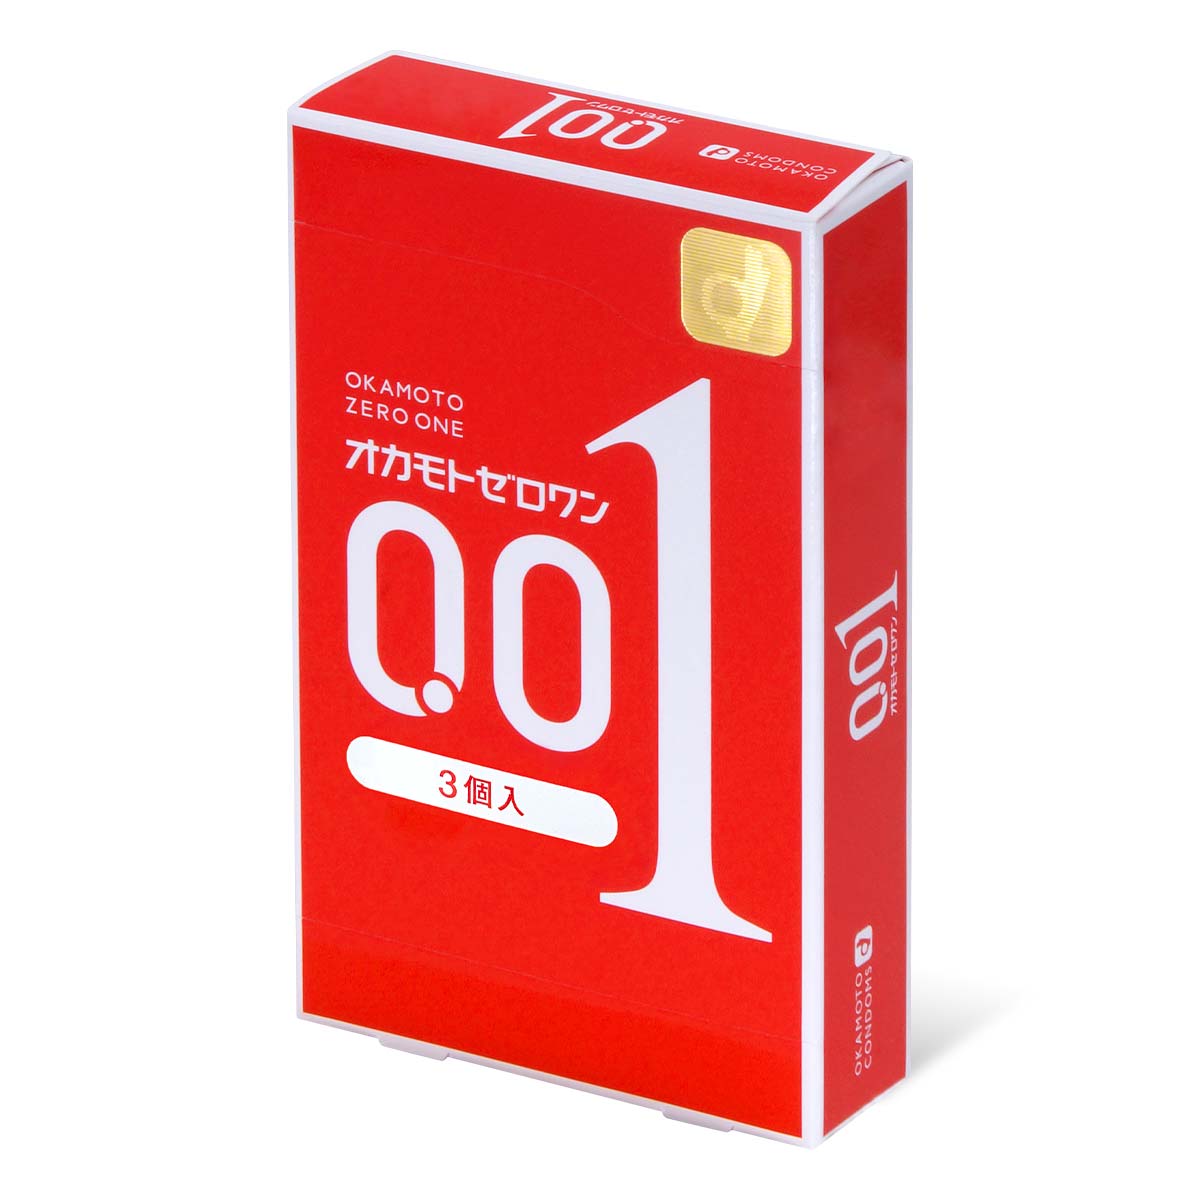 Okamoto 0.01 3's Pack PU Condom-thumb_1